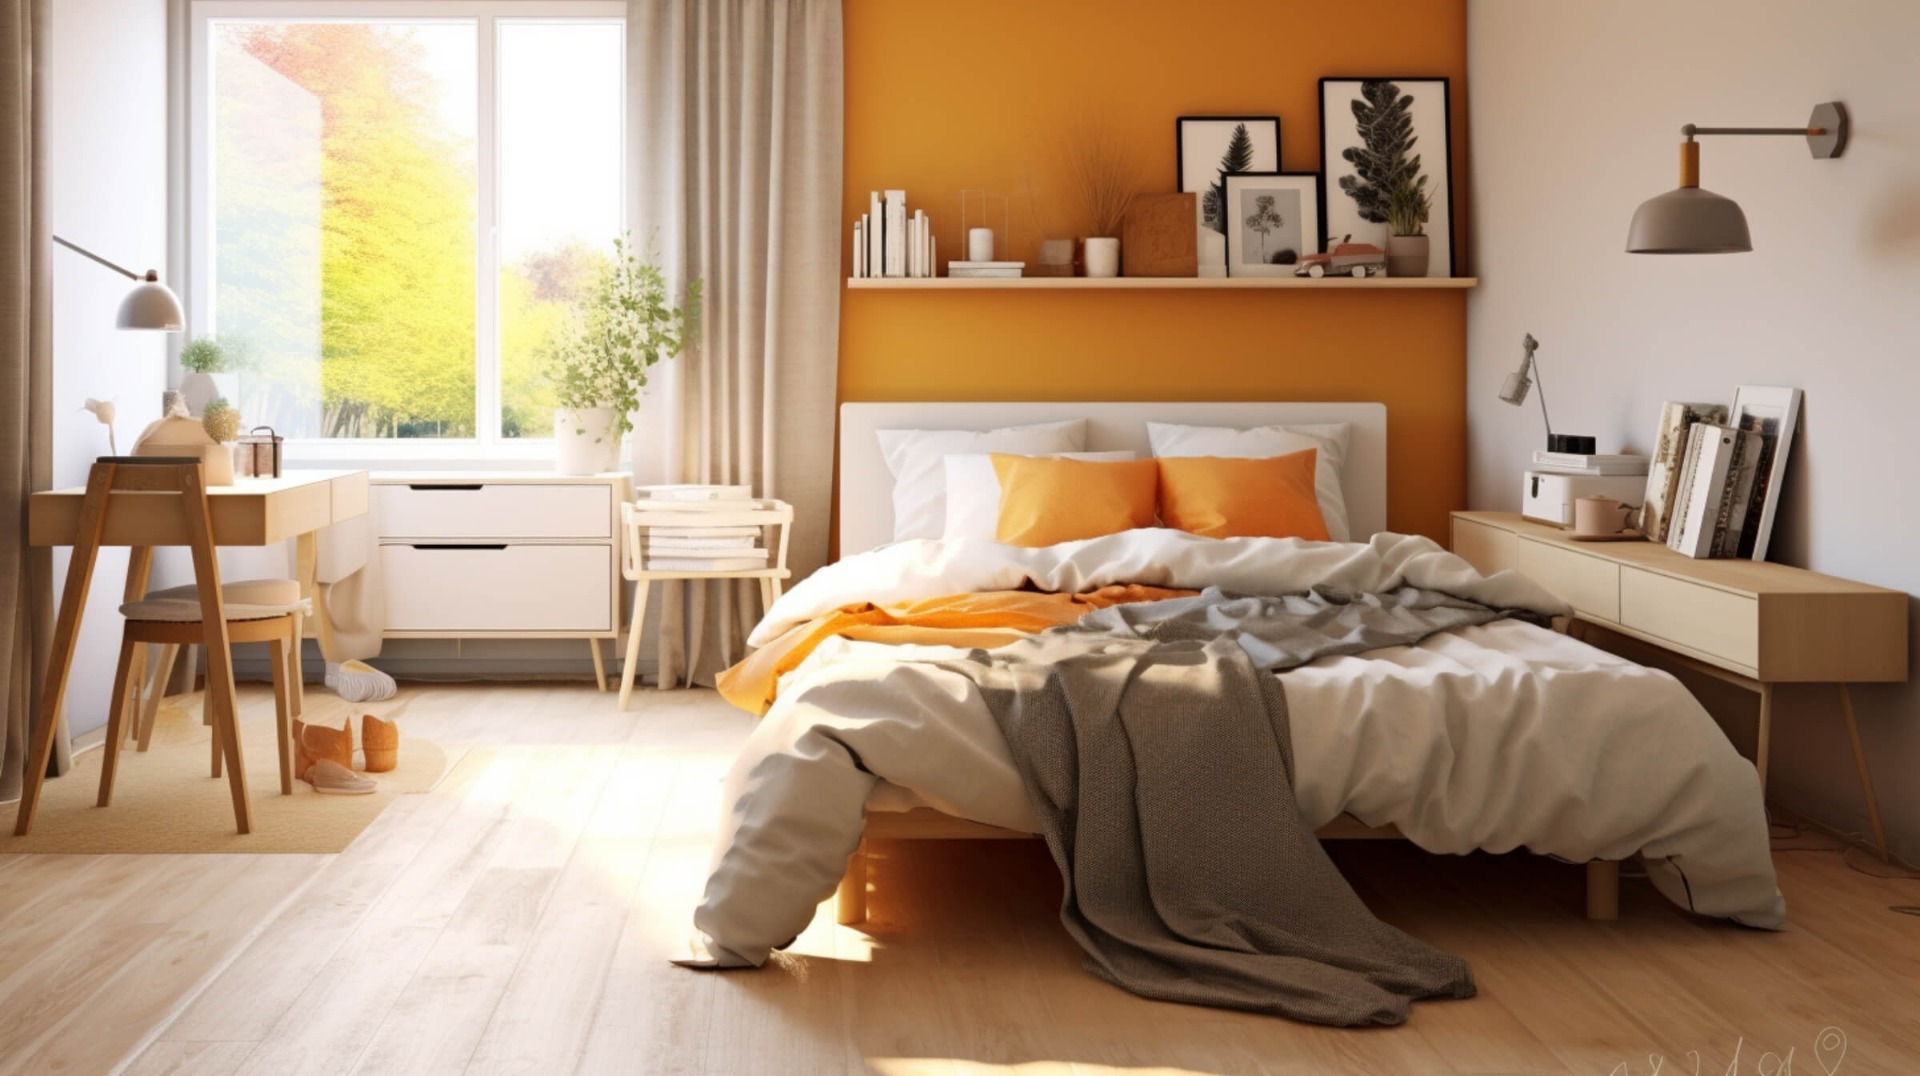 Hestya-Scandinavian-bedroom-with-a-warm-and-cozy-palette